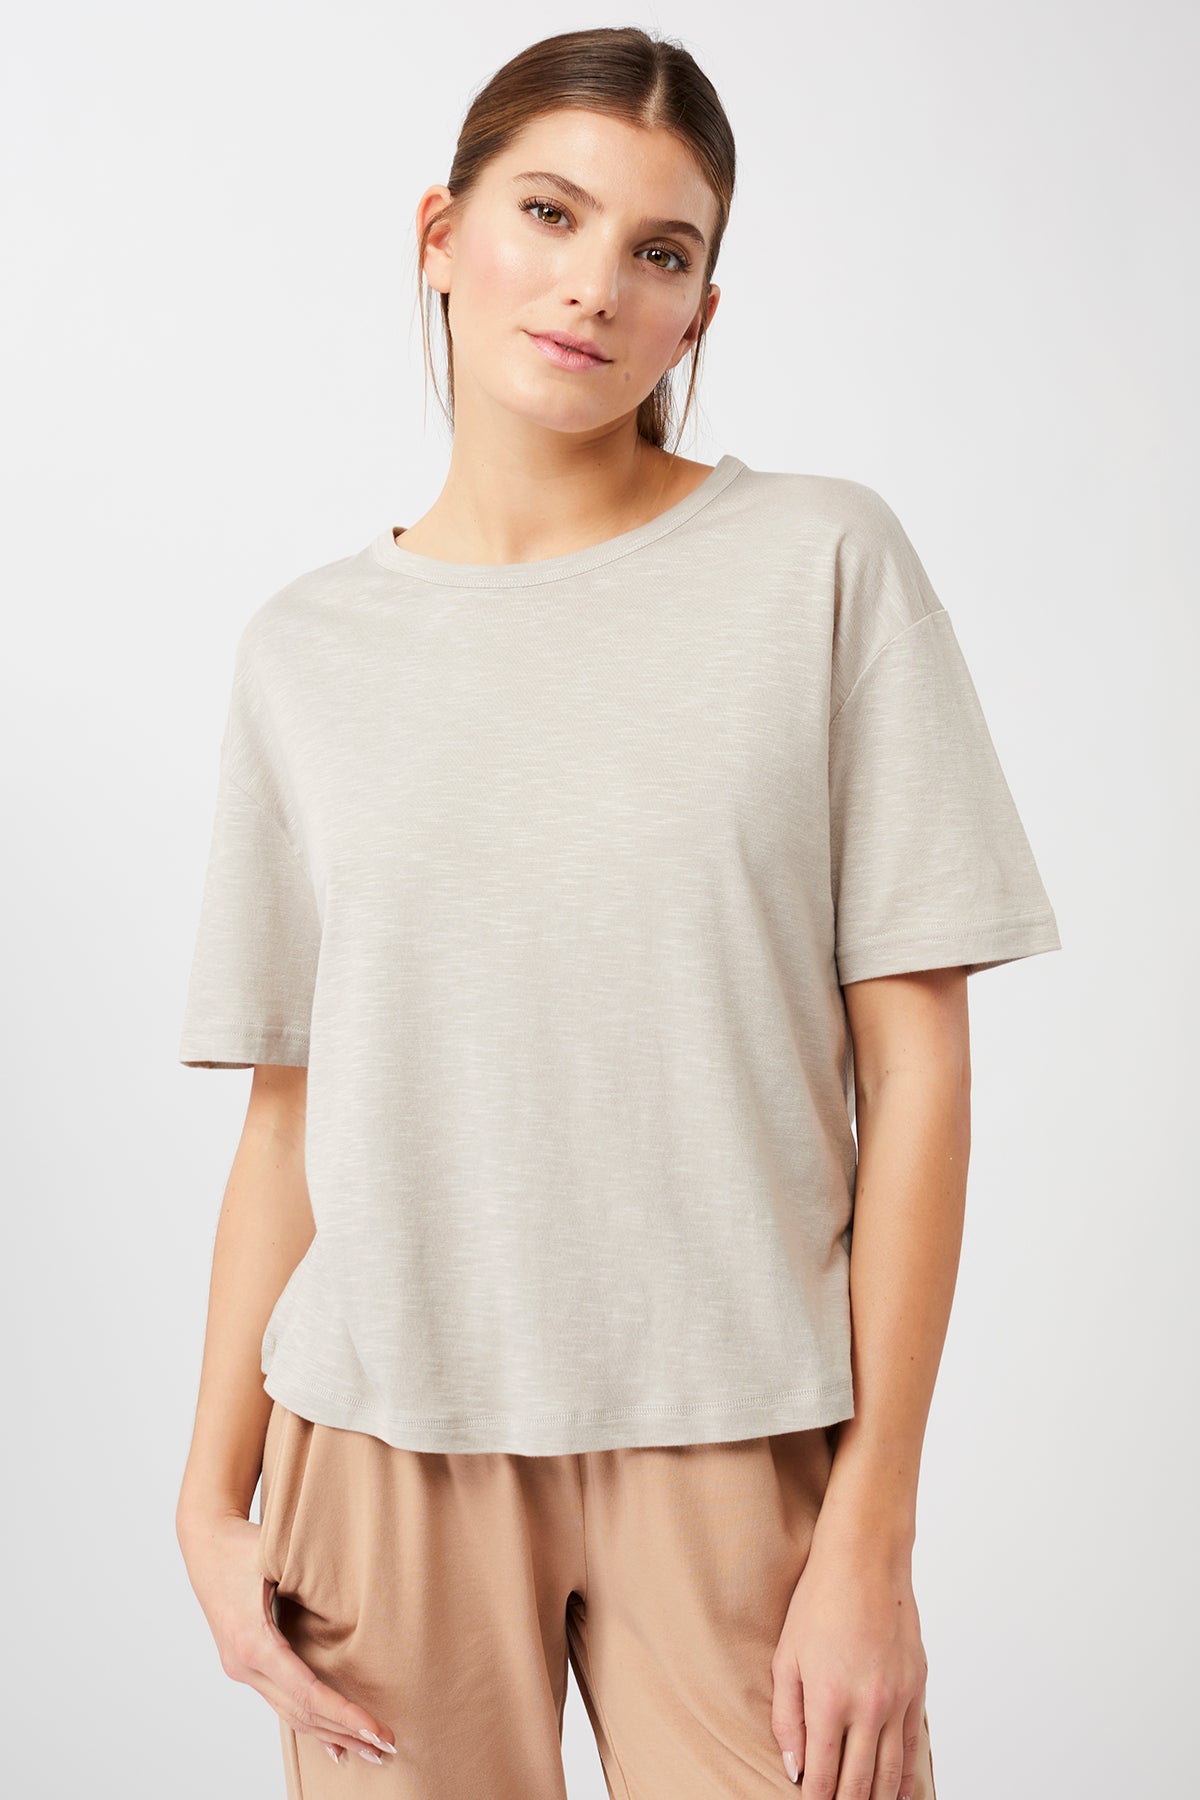 Mandala Yoga Shirt Beige Front - Boxy T-Shirt